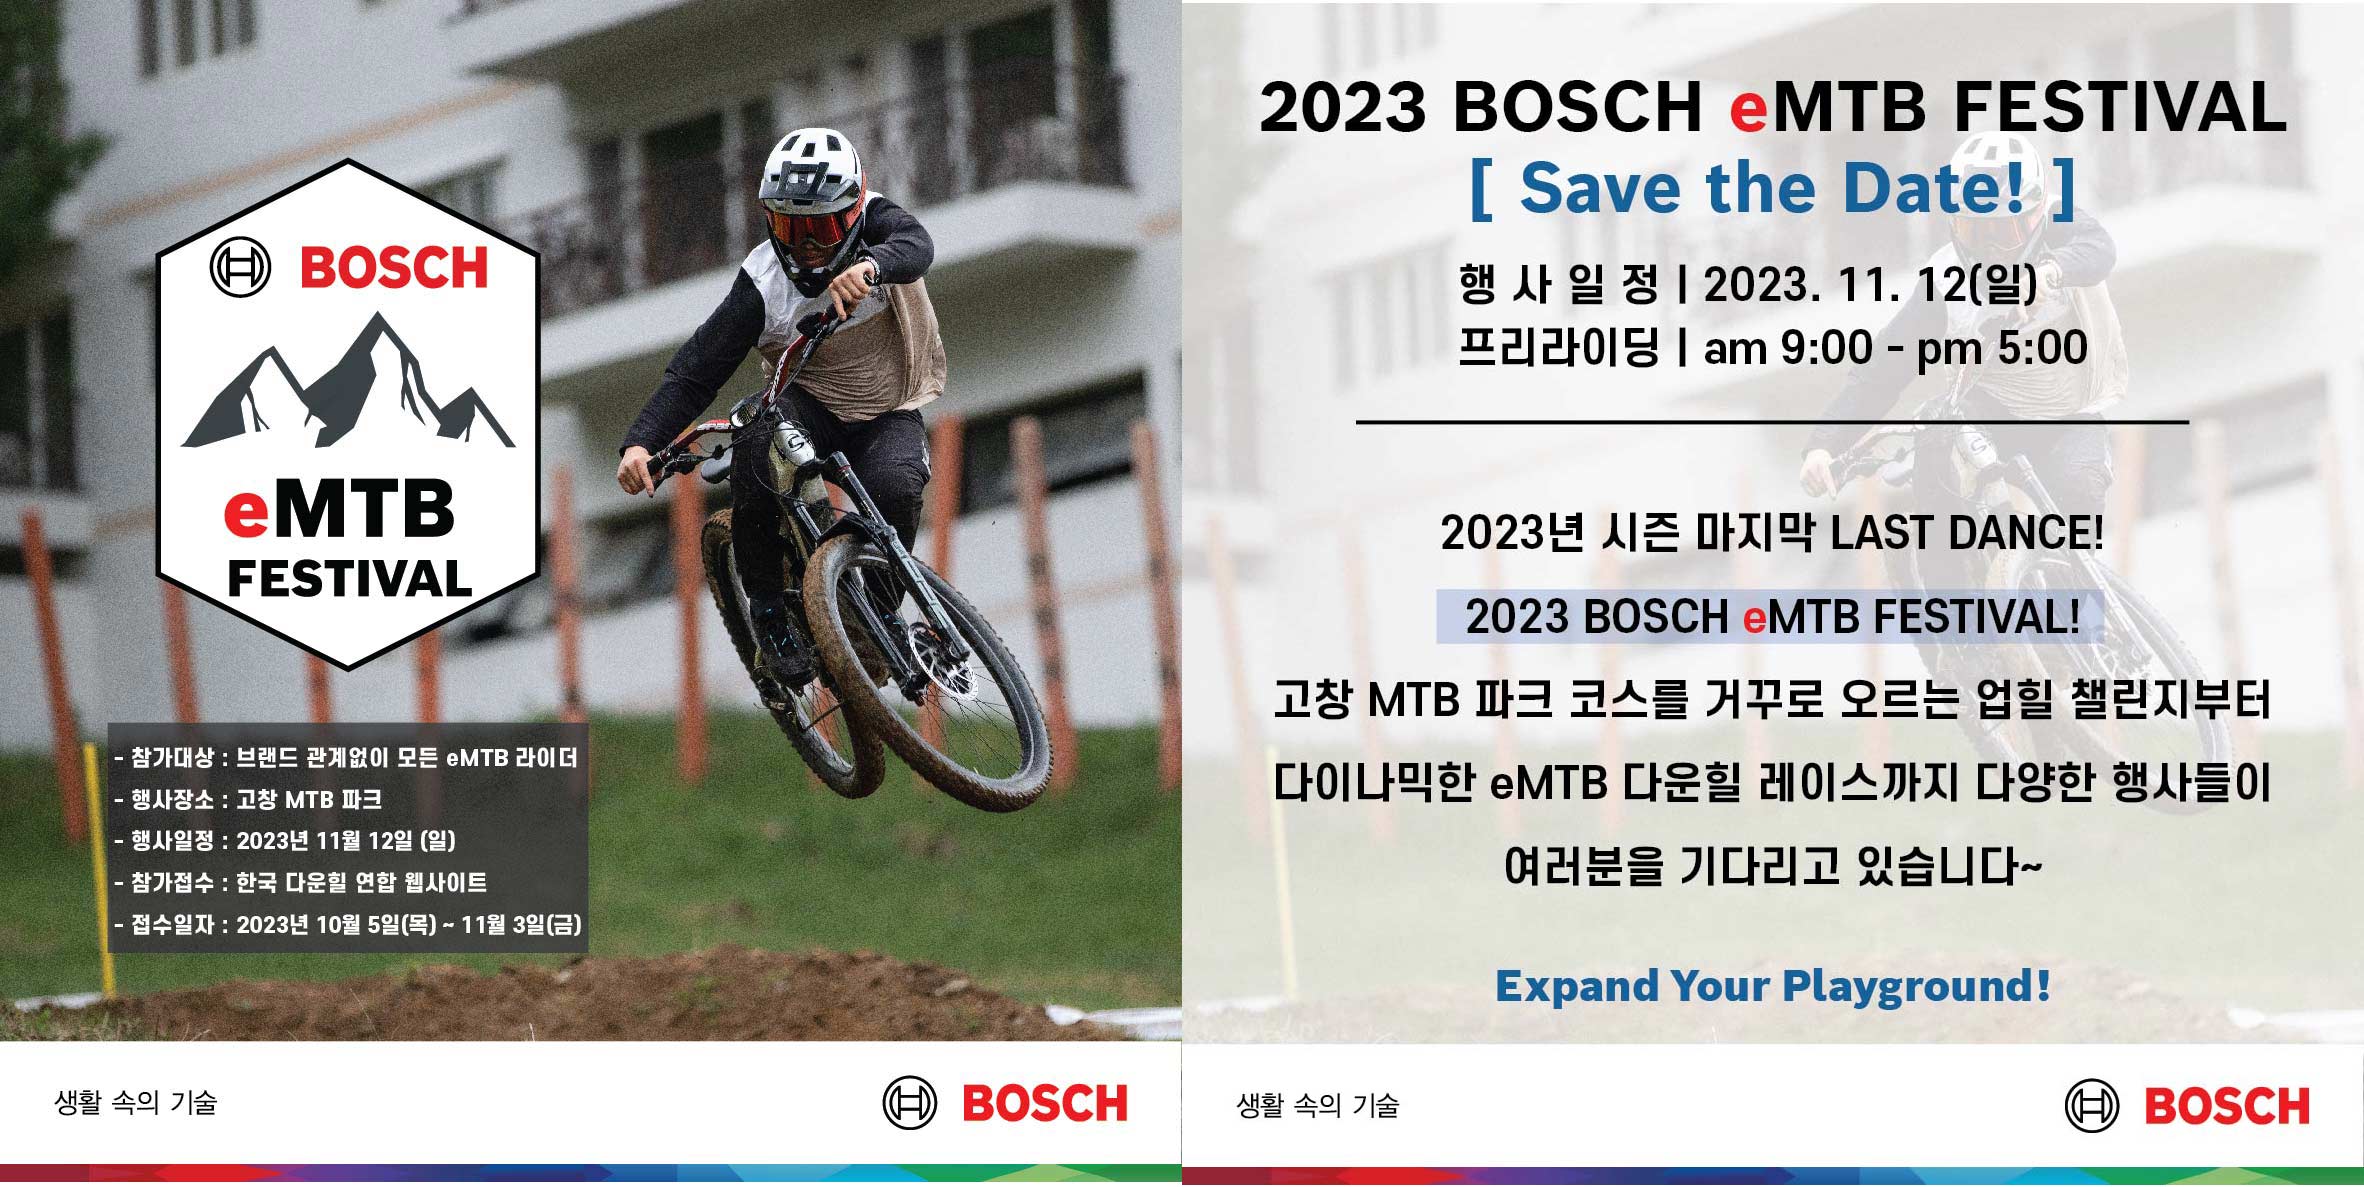 news_2023_Bosch_eMTB_Festival_2